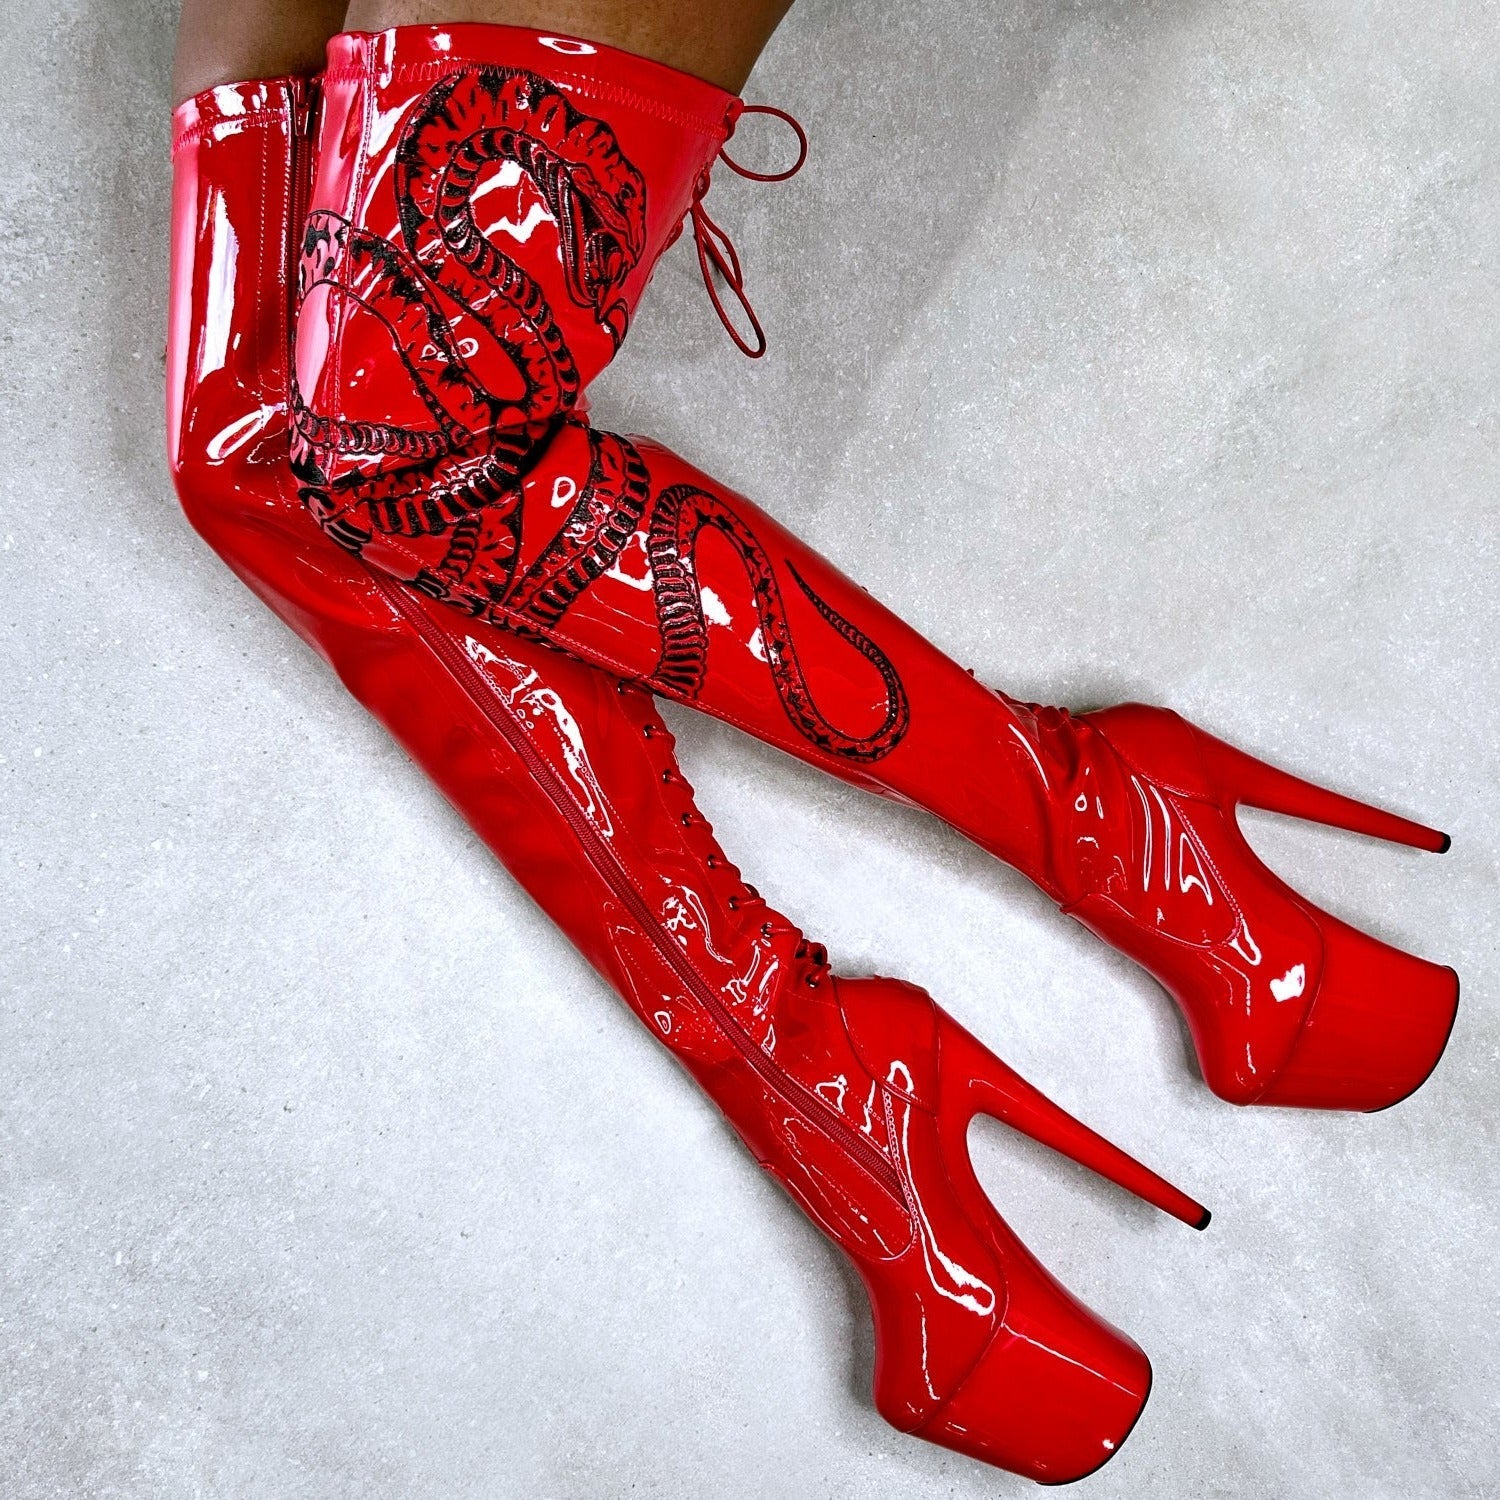 VIPER Boot Red with Black Thigh High - 8INCH, stripper shoe, stripper heel, pole heel, not a pleaser, platform, dancer, pole dance, floor work